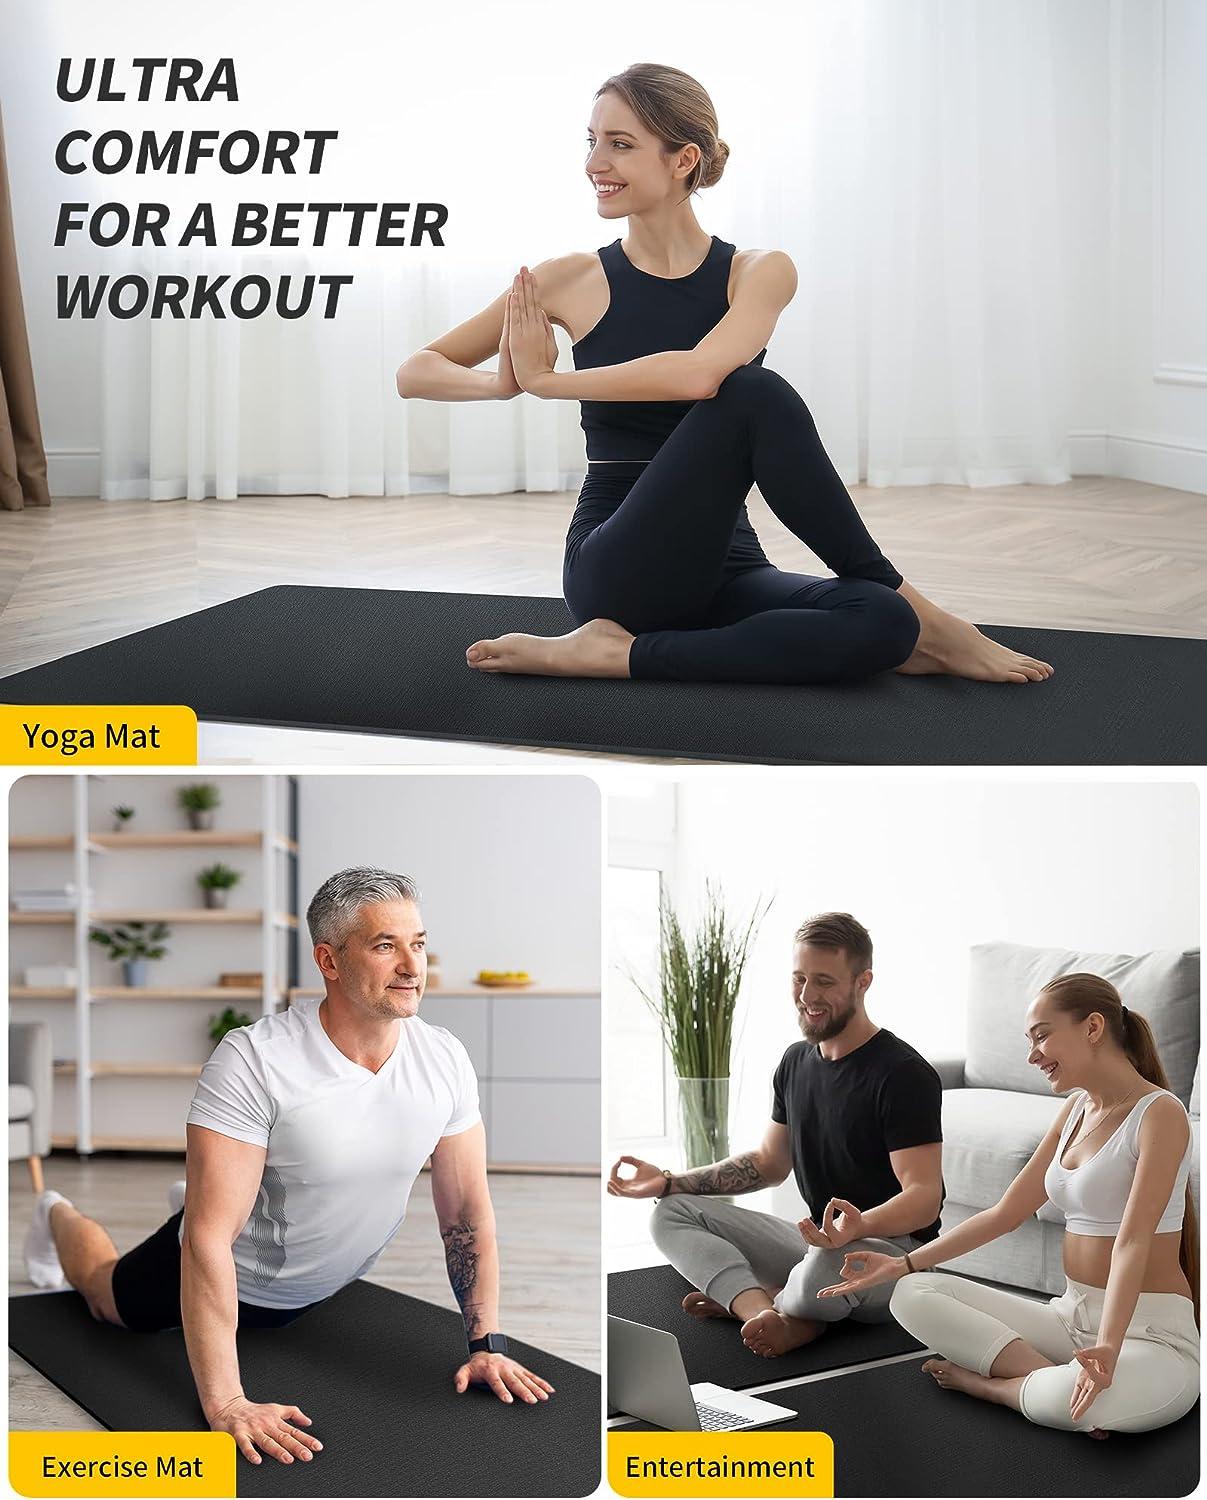 Yoga Studio 6mm White Yoga Mat With Custom Logo Design - Top